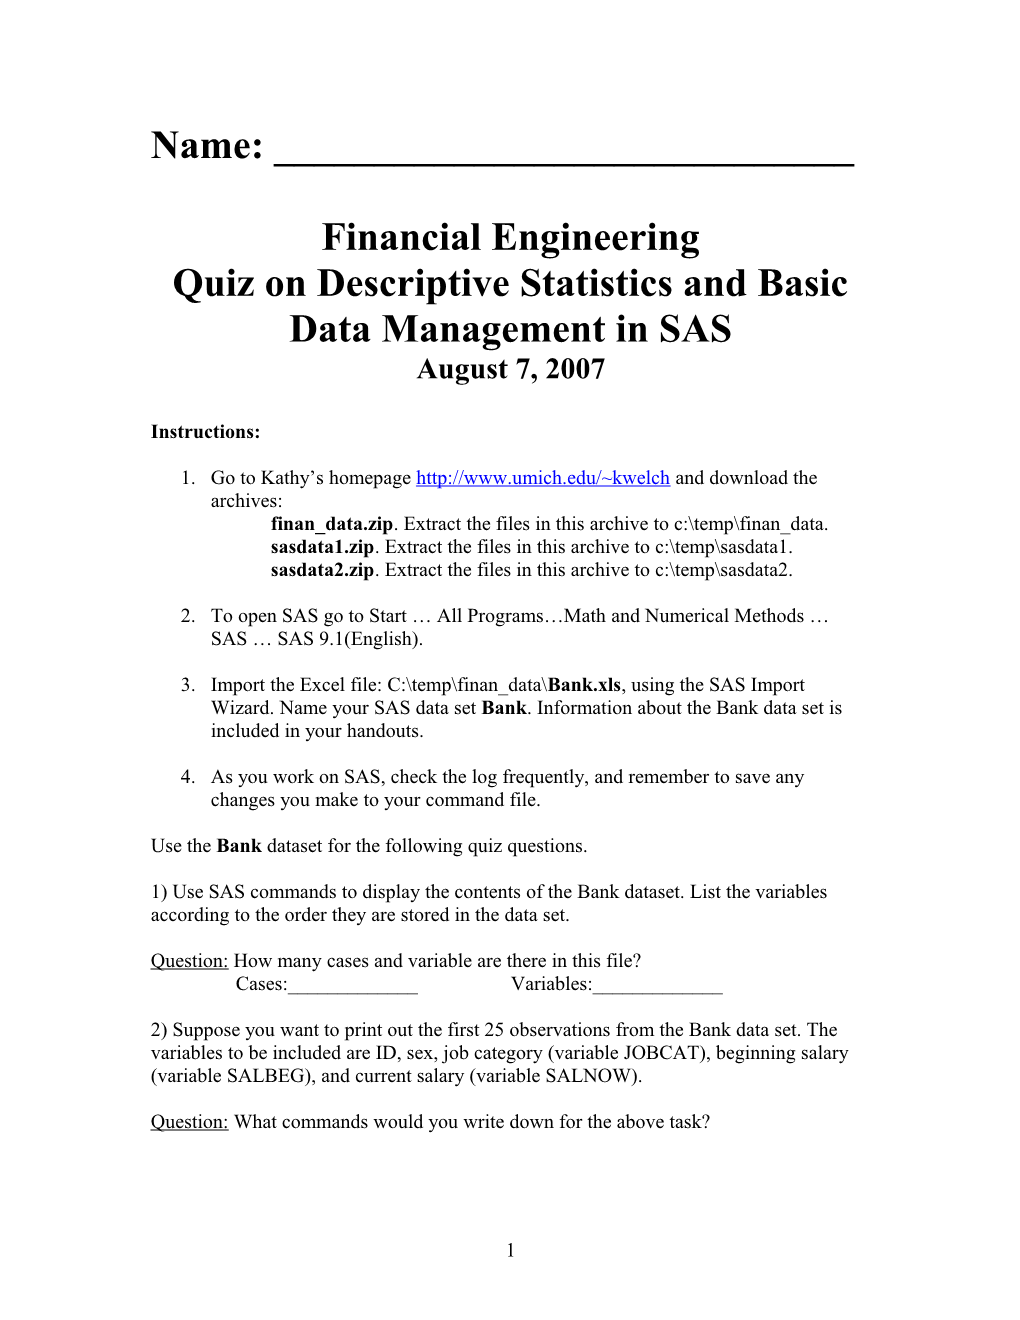 Quiz on Descriptive Statistics and Basic Data Management in SAS